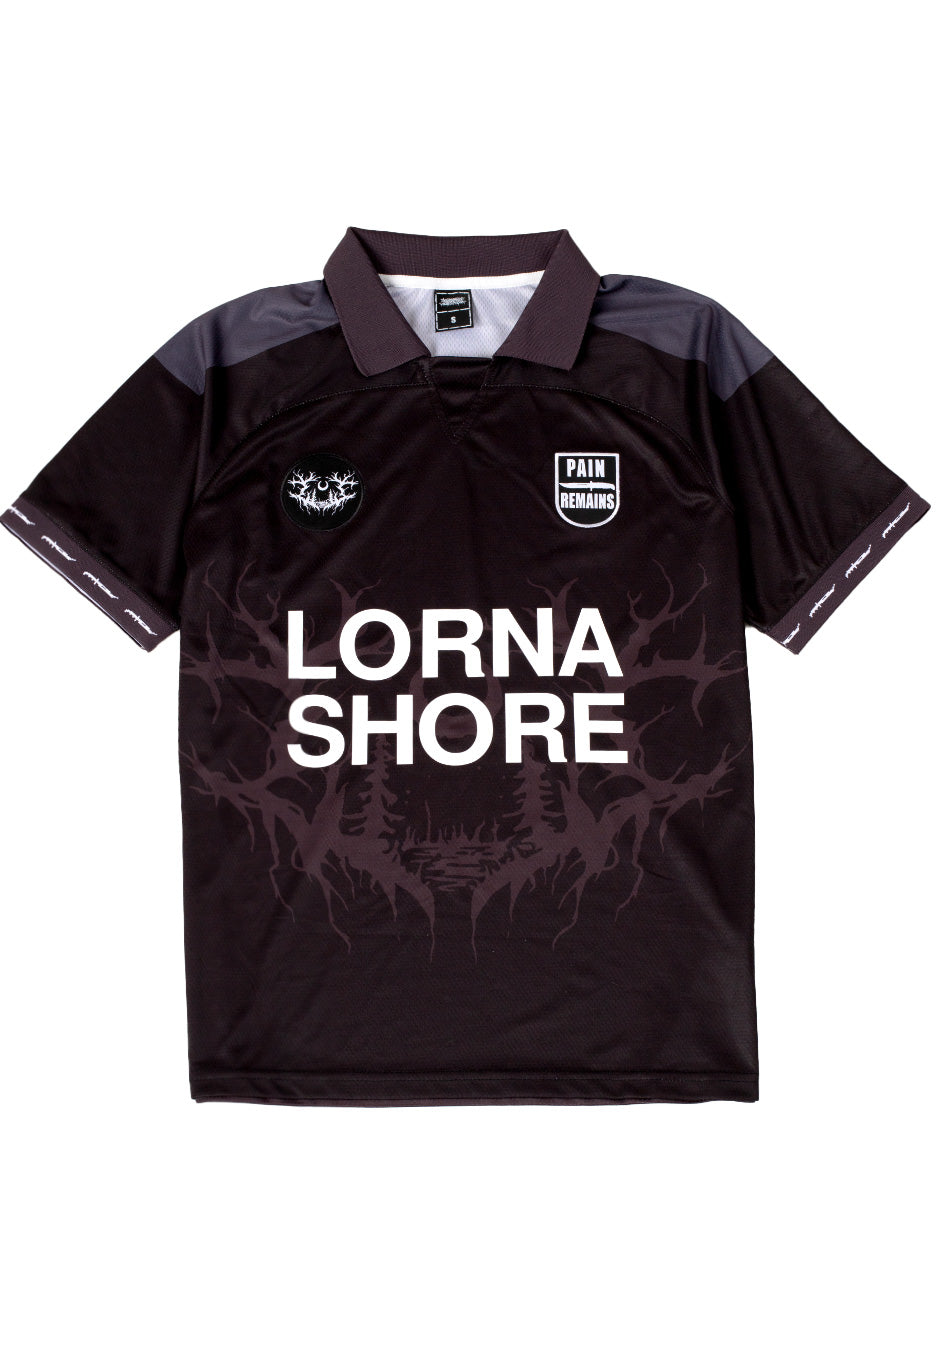 Lorna Shore - Pain Remains - Jersey | Men-Image